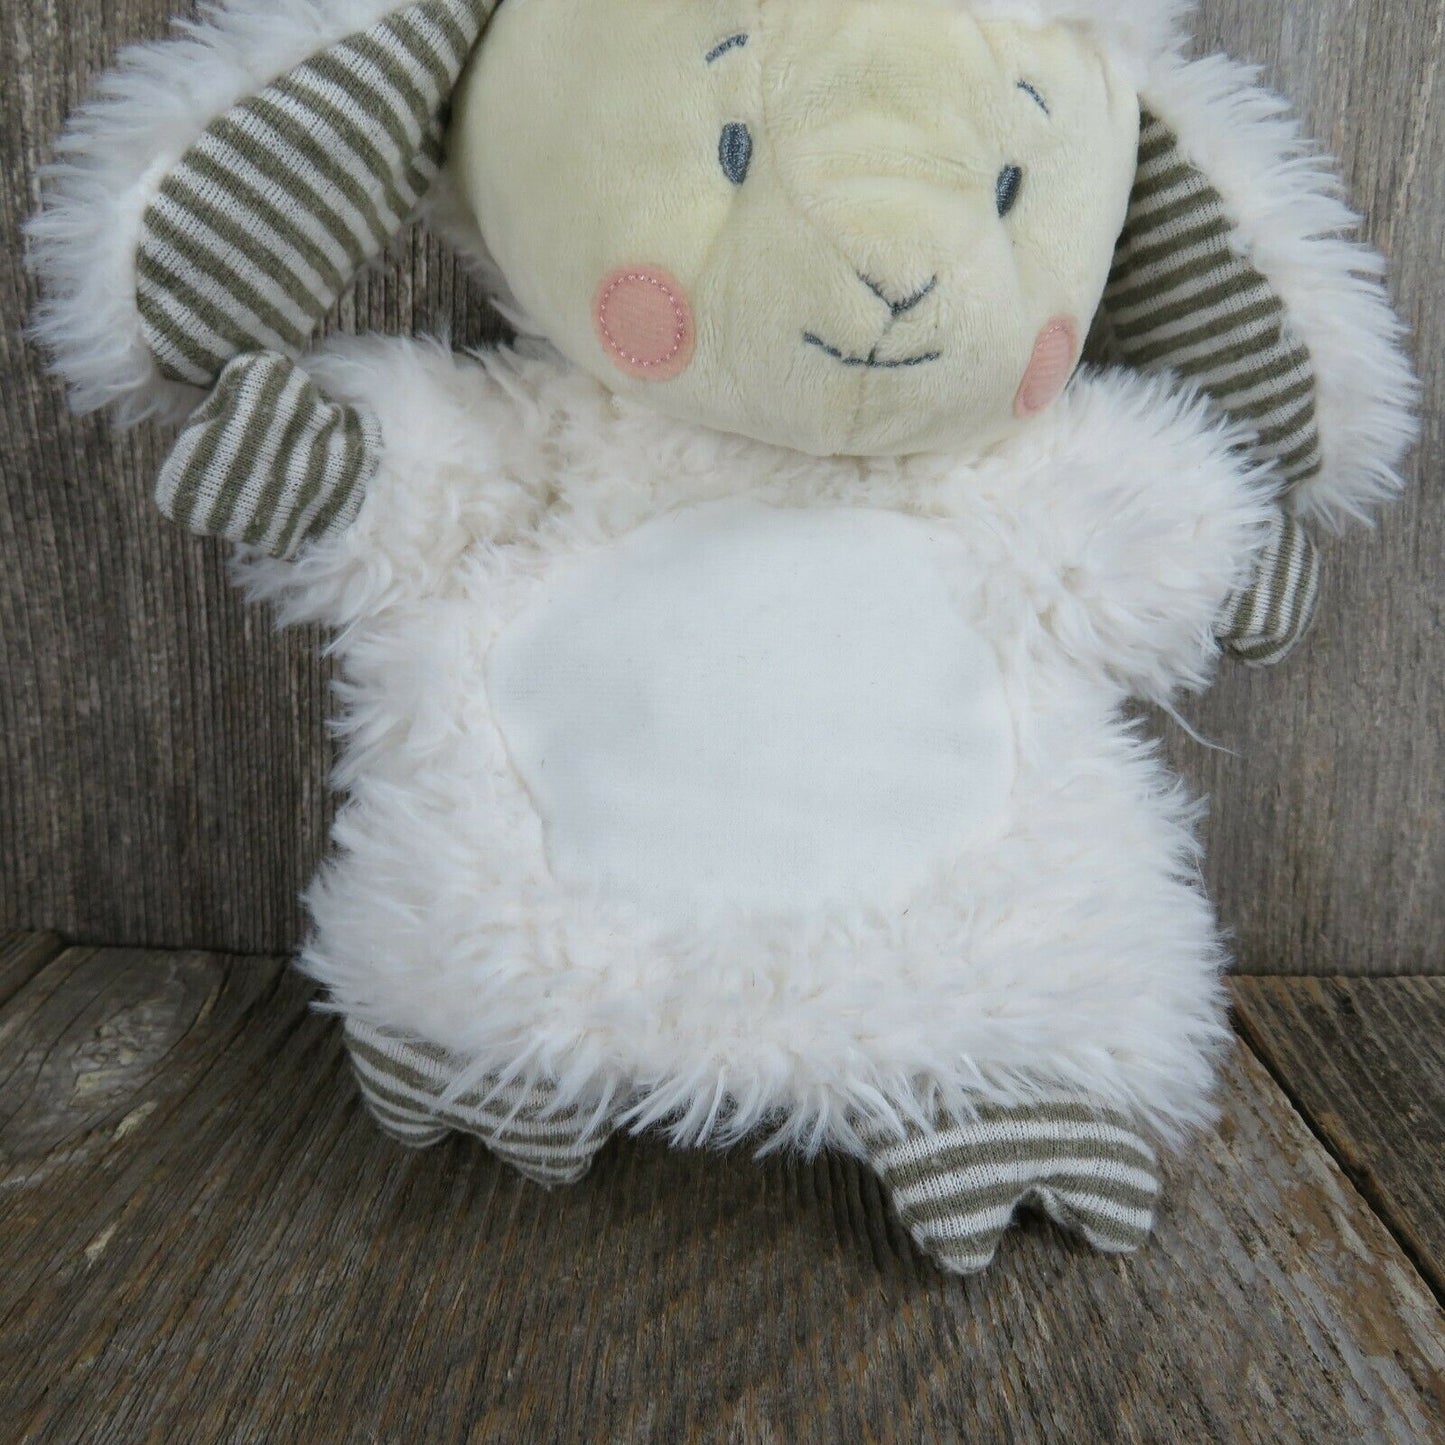 White Sheep Puppet Plush Demdaco Striped Ears Toy Nursery Rhyme 2020 Stuffed